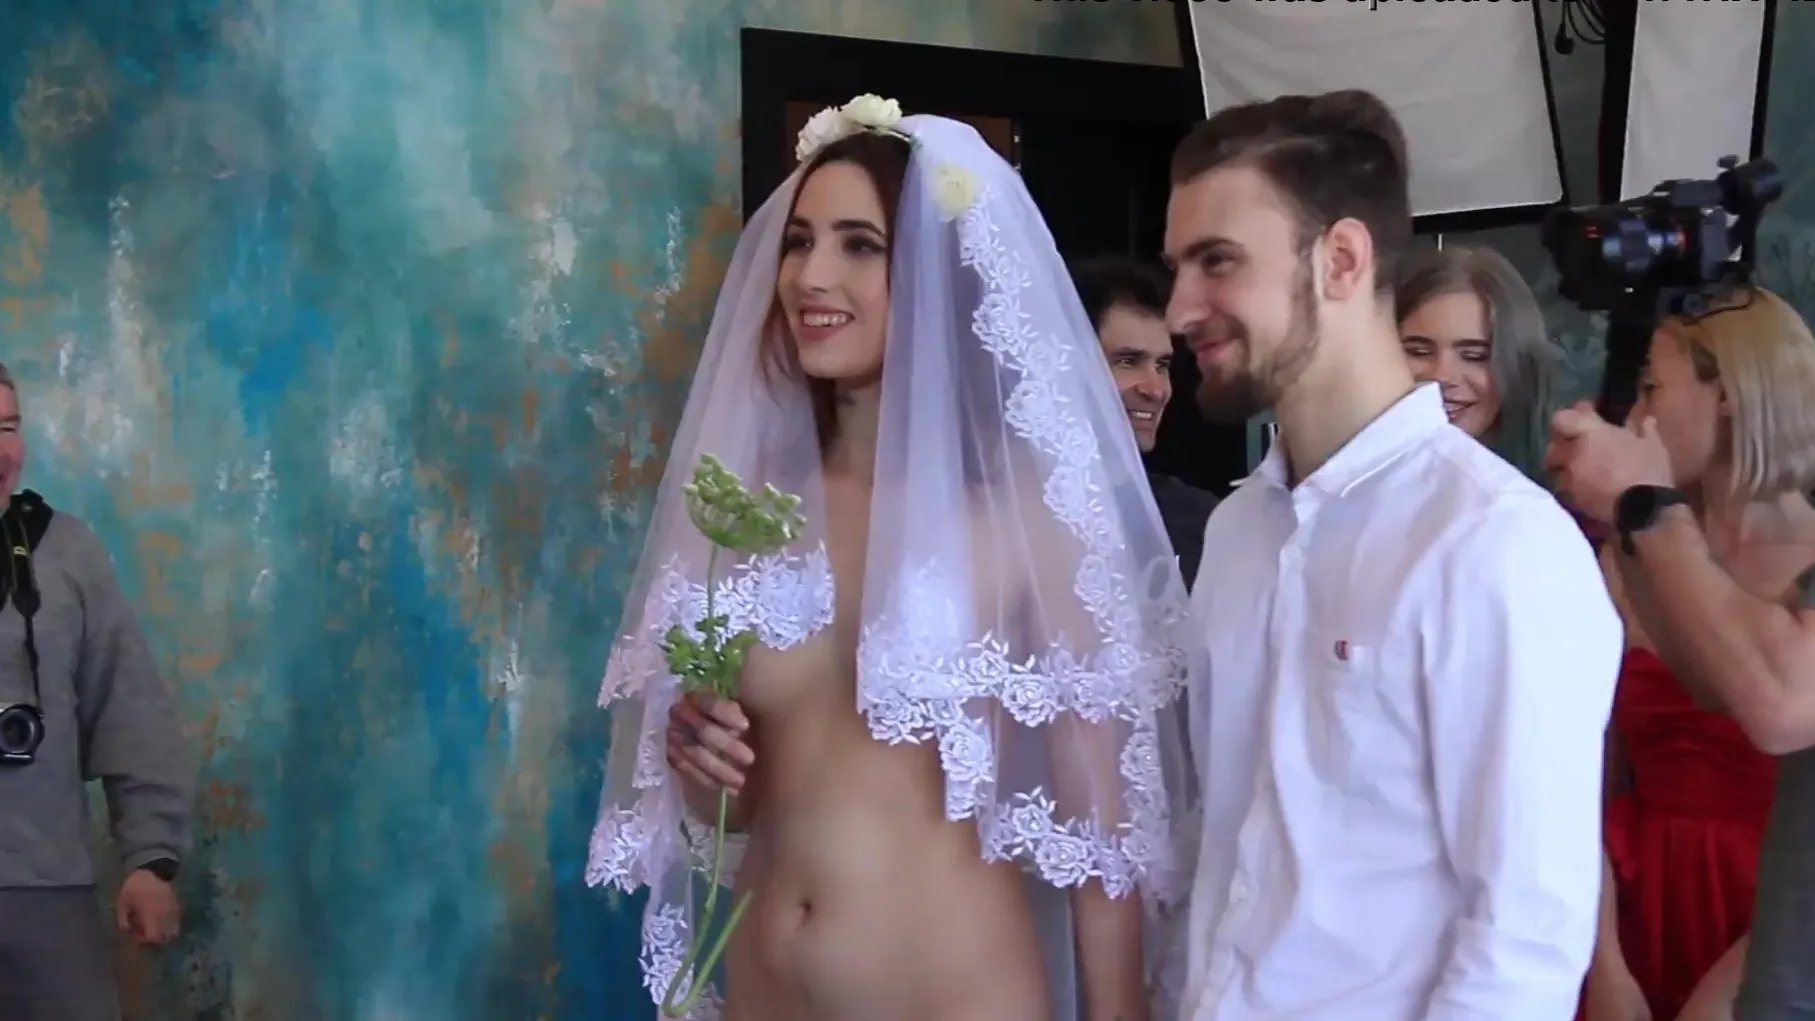 Naked wedding video